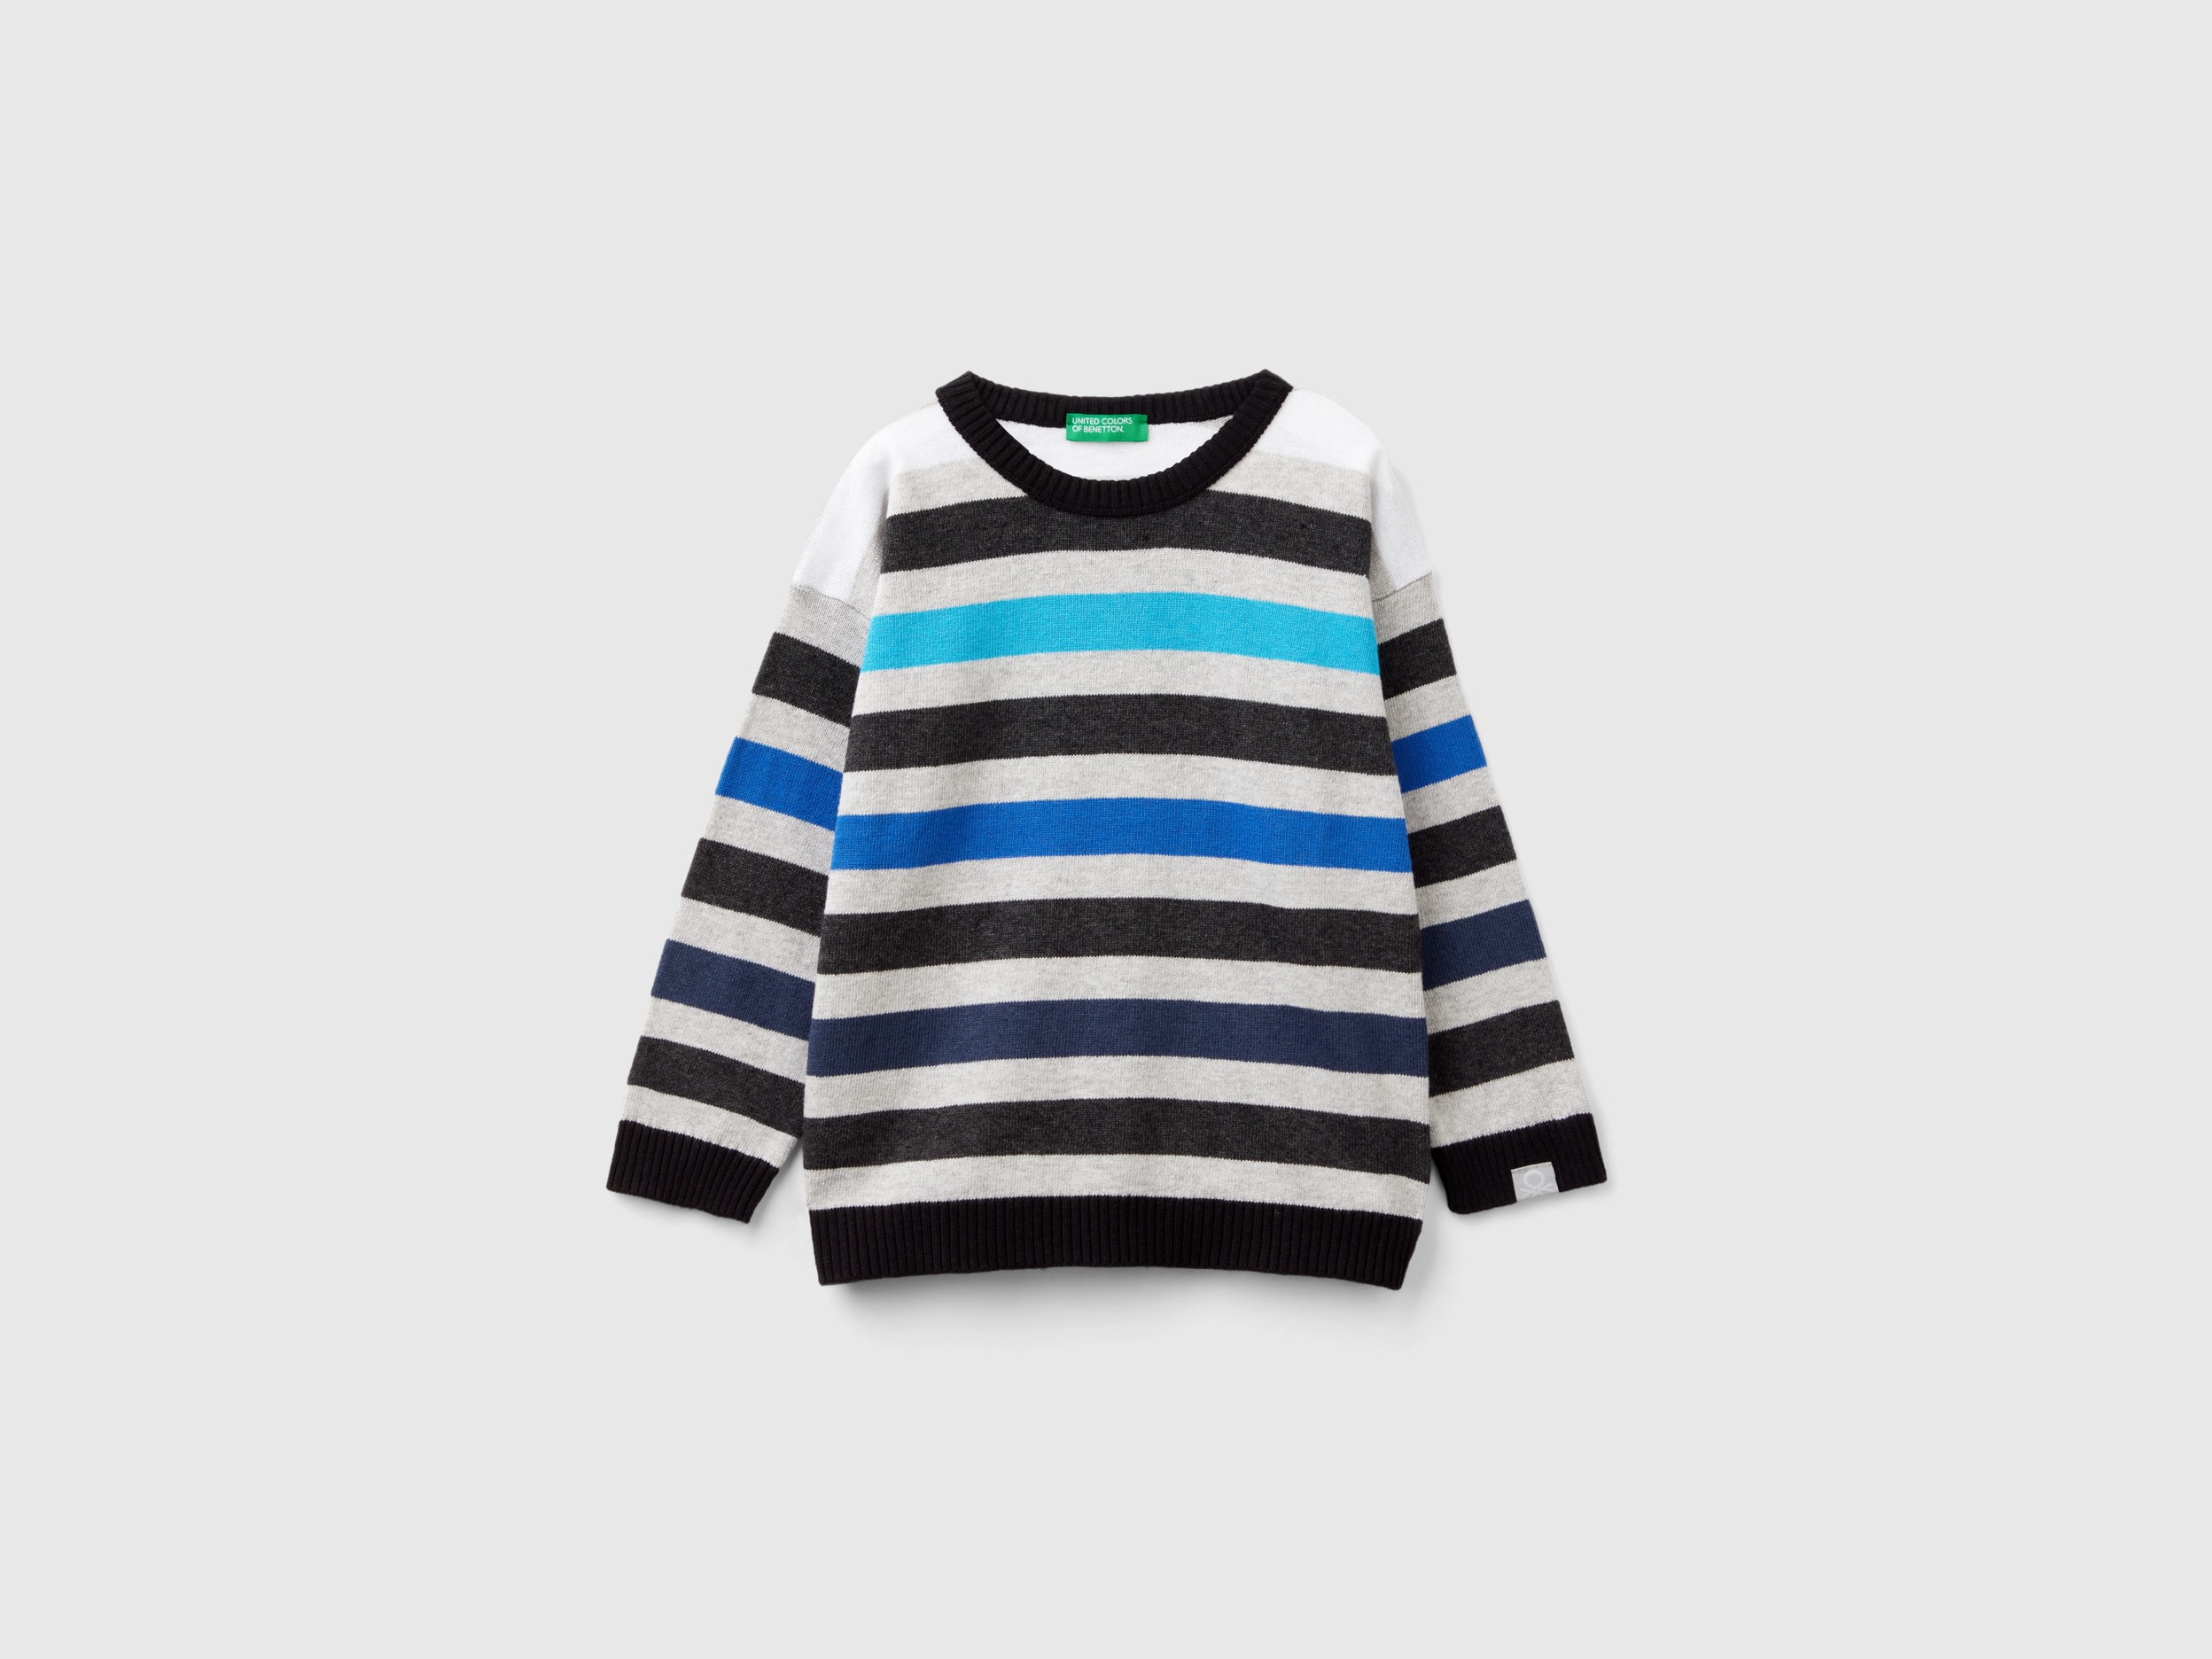 Benetton, Striped Sweater, size 2-3, Multi-color, Kids